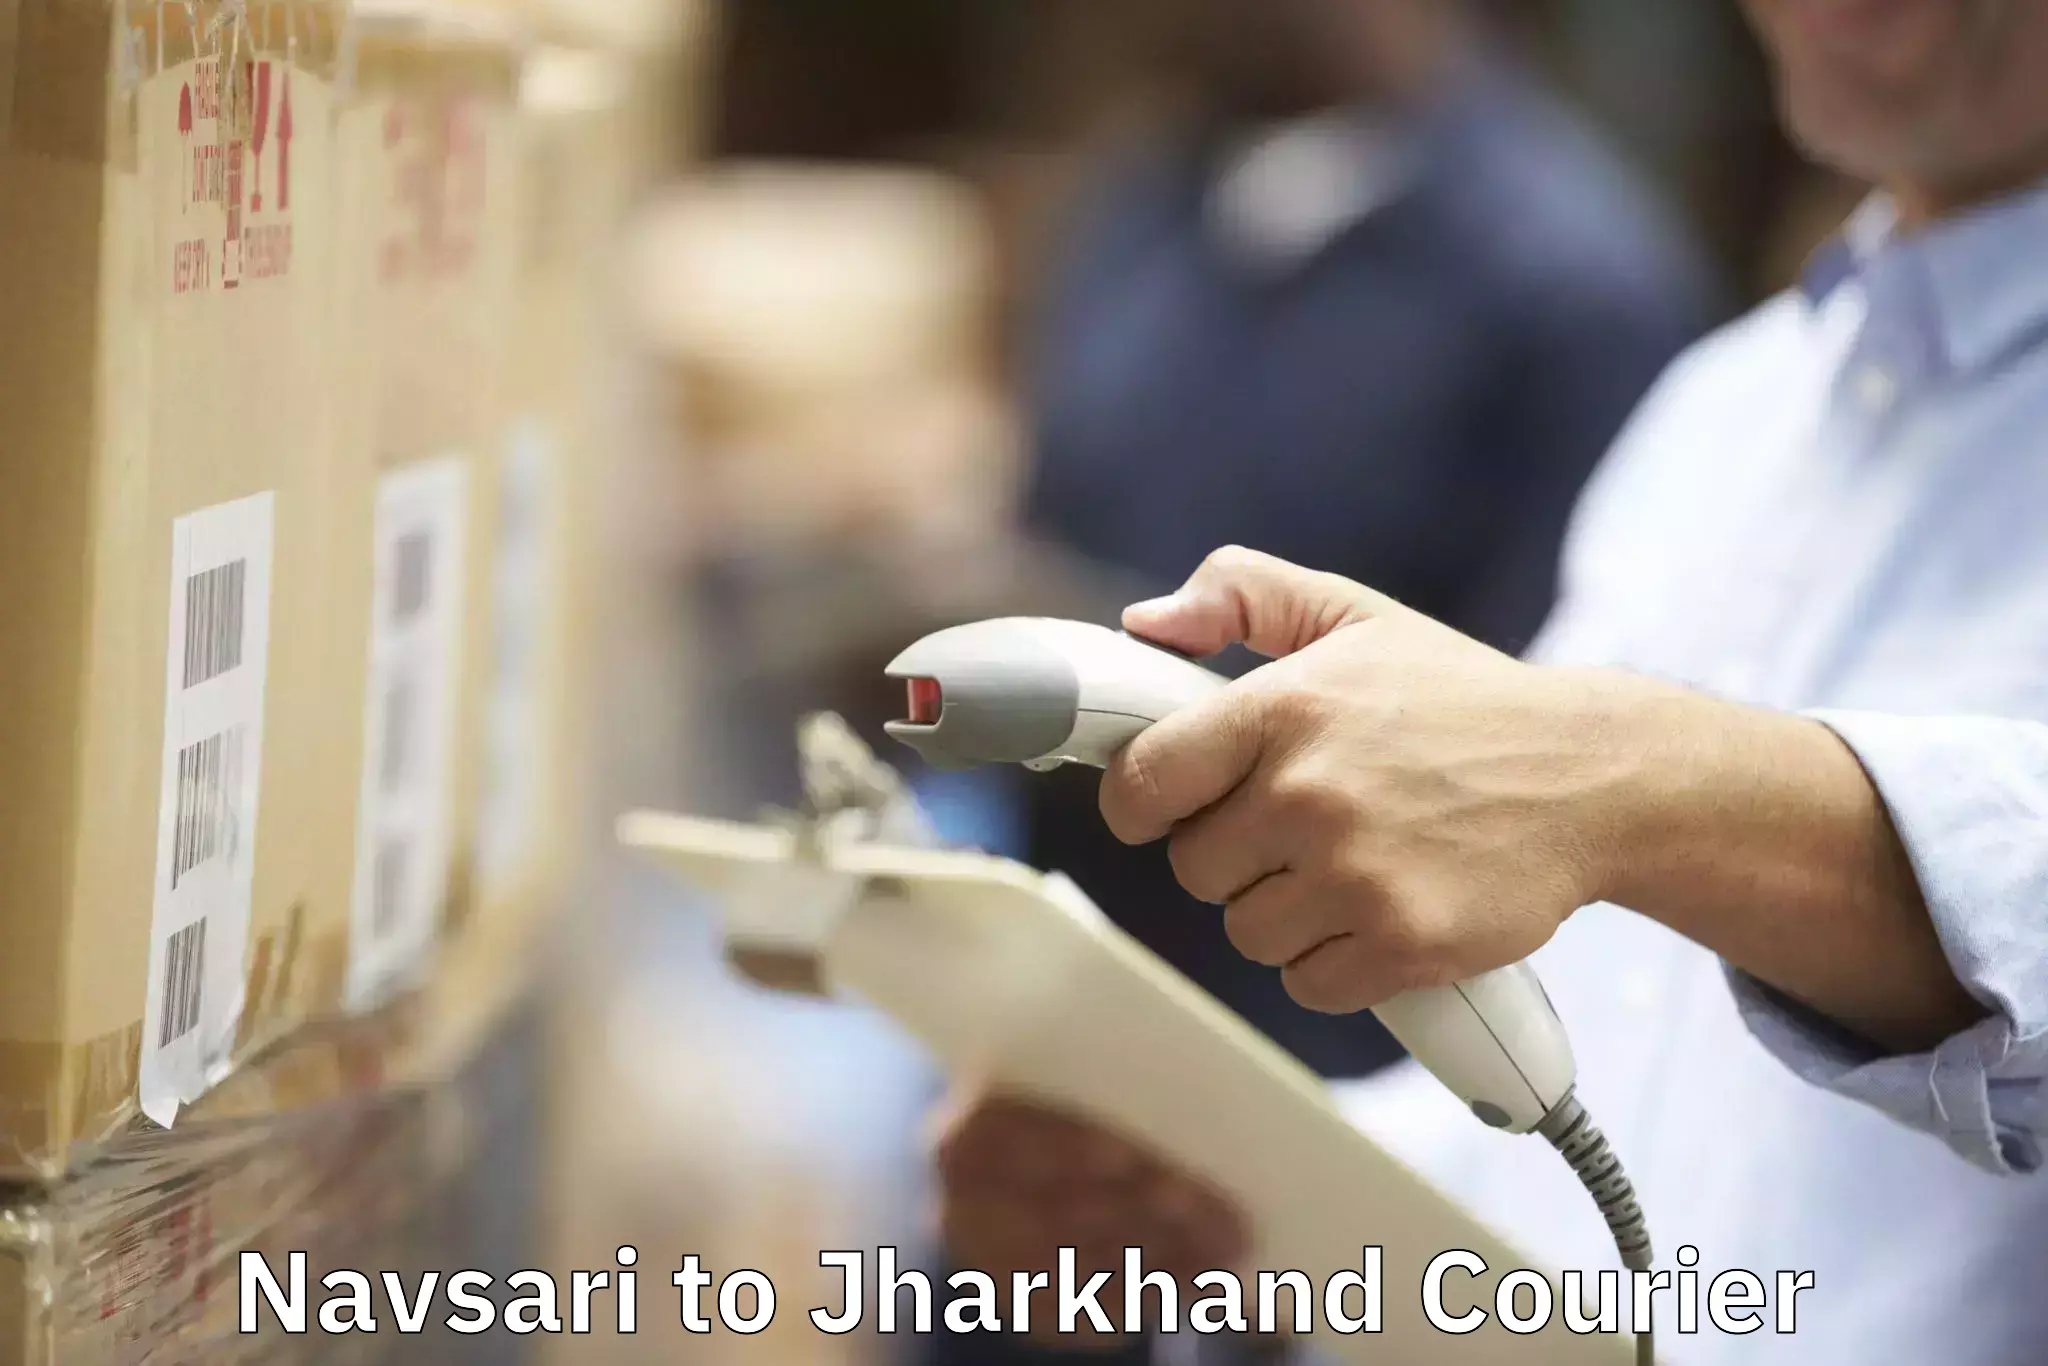 Efficient moving company Navsari to Jamshedpur